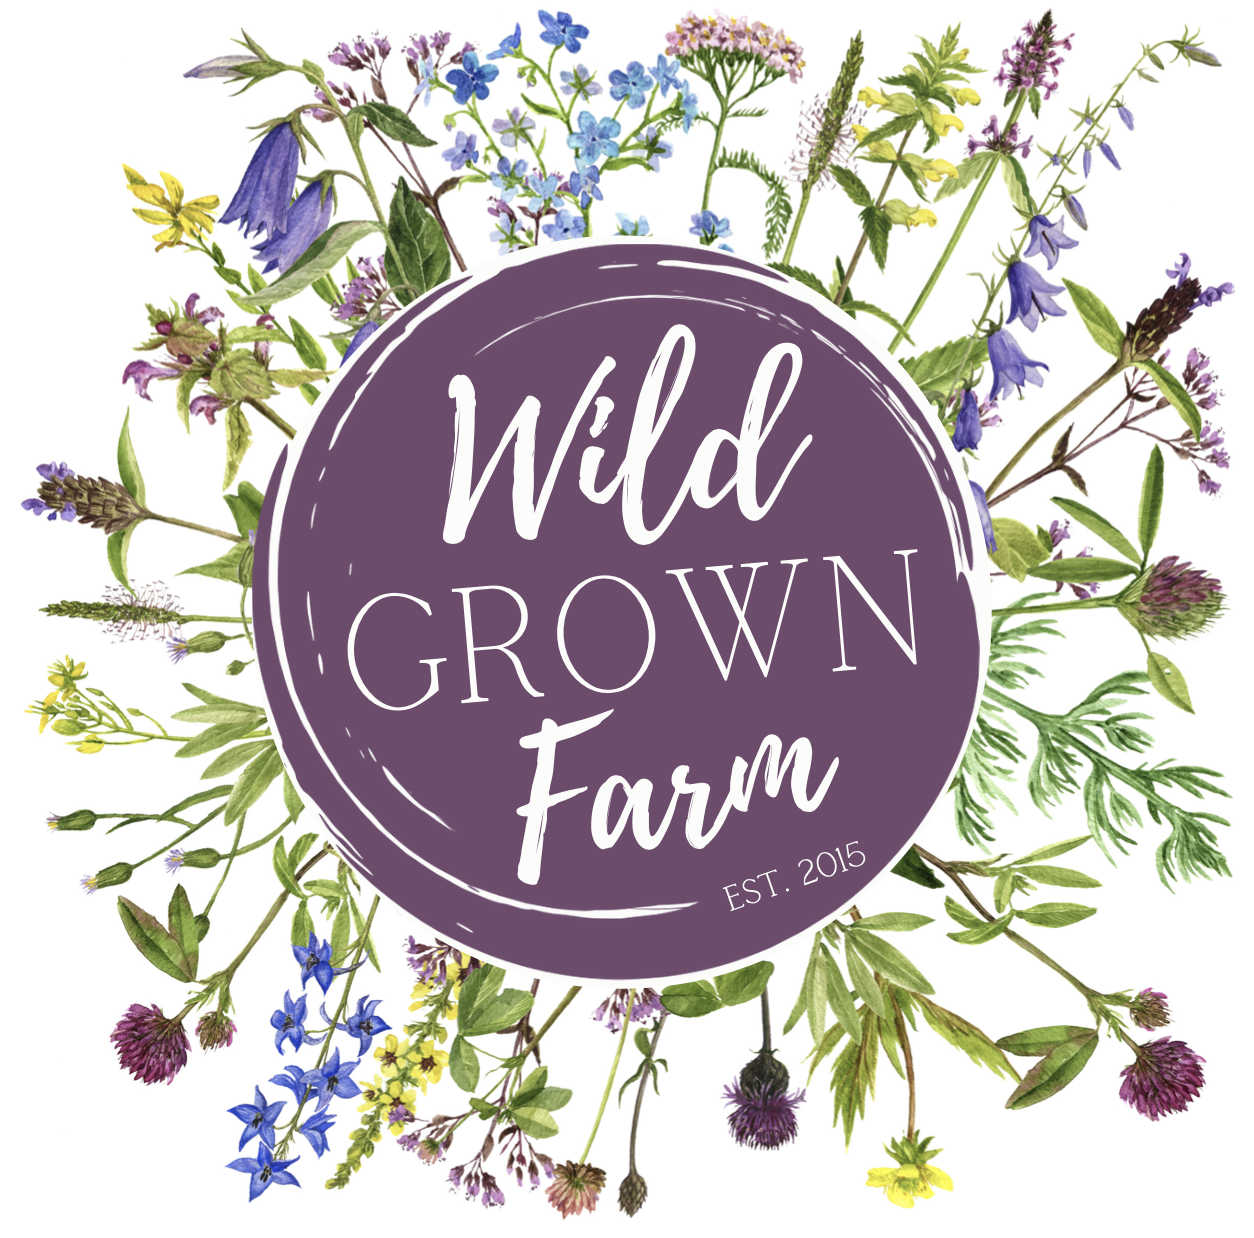 Wild Grown Farm 